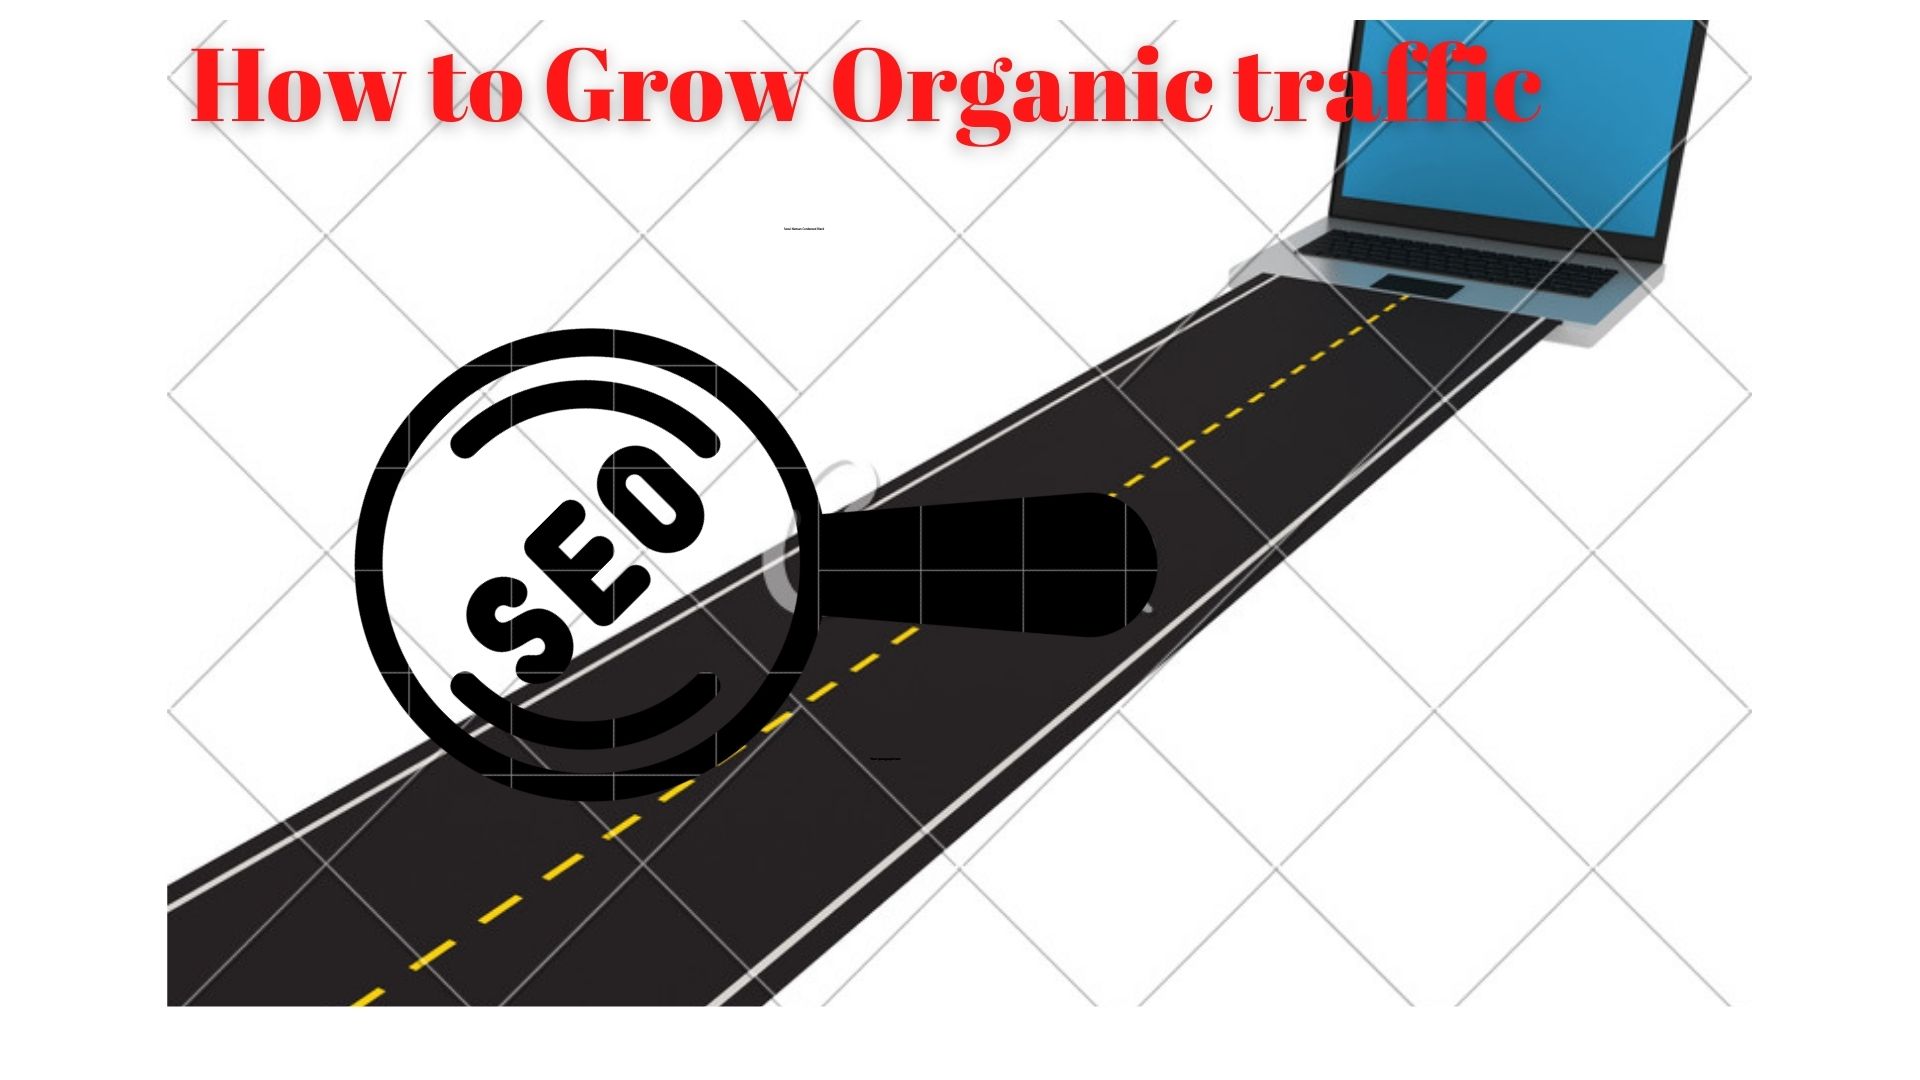 How to Grow Organic traffic your Blog's SEO